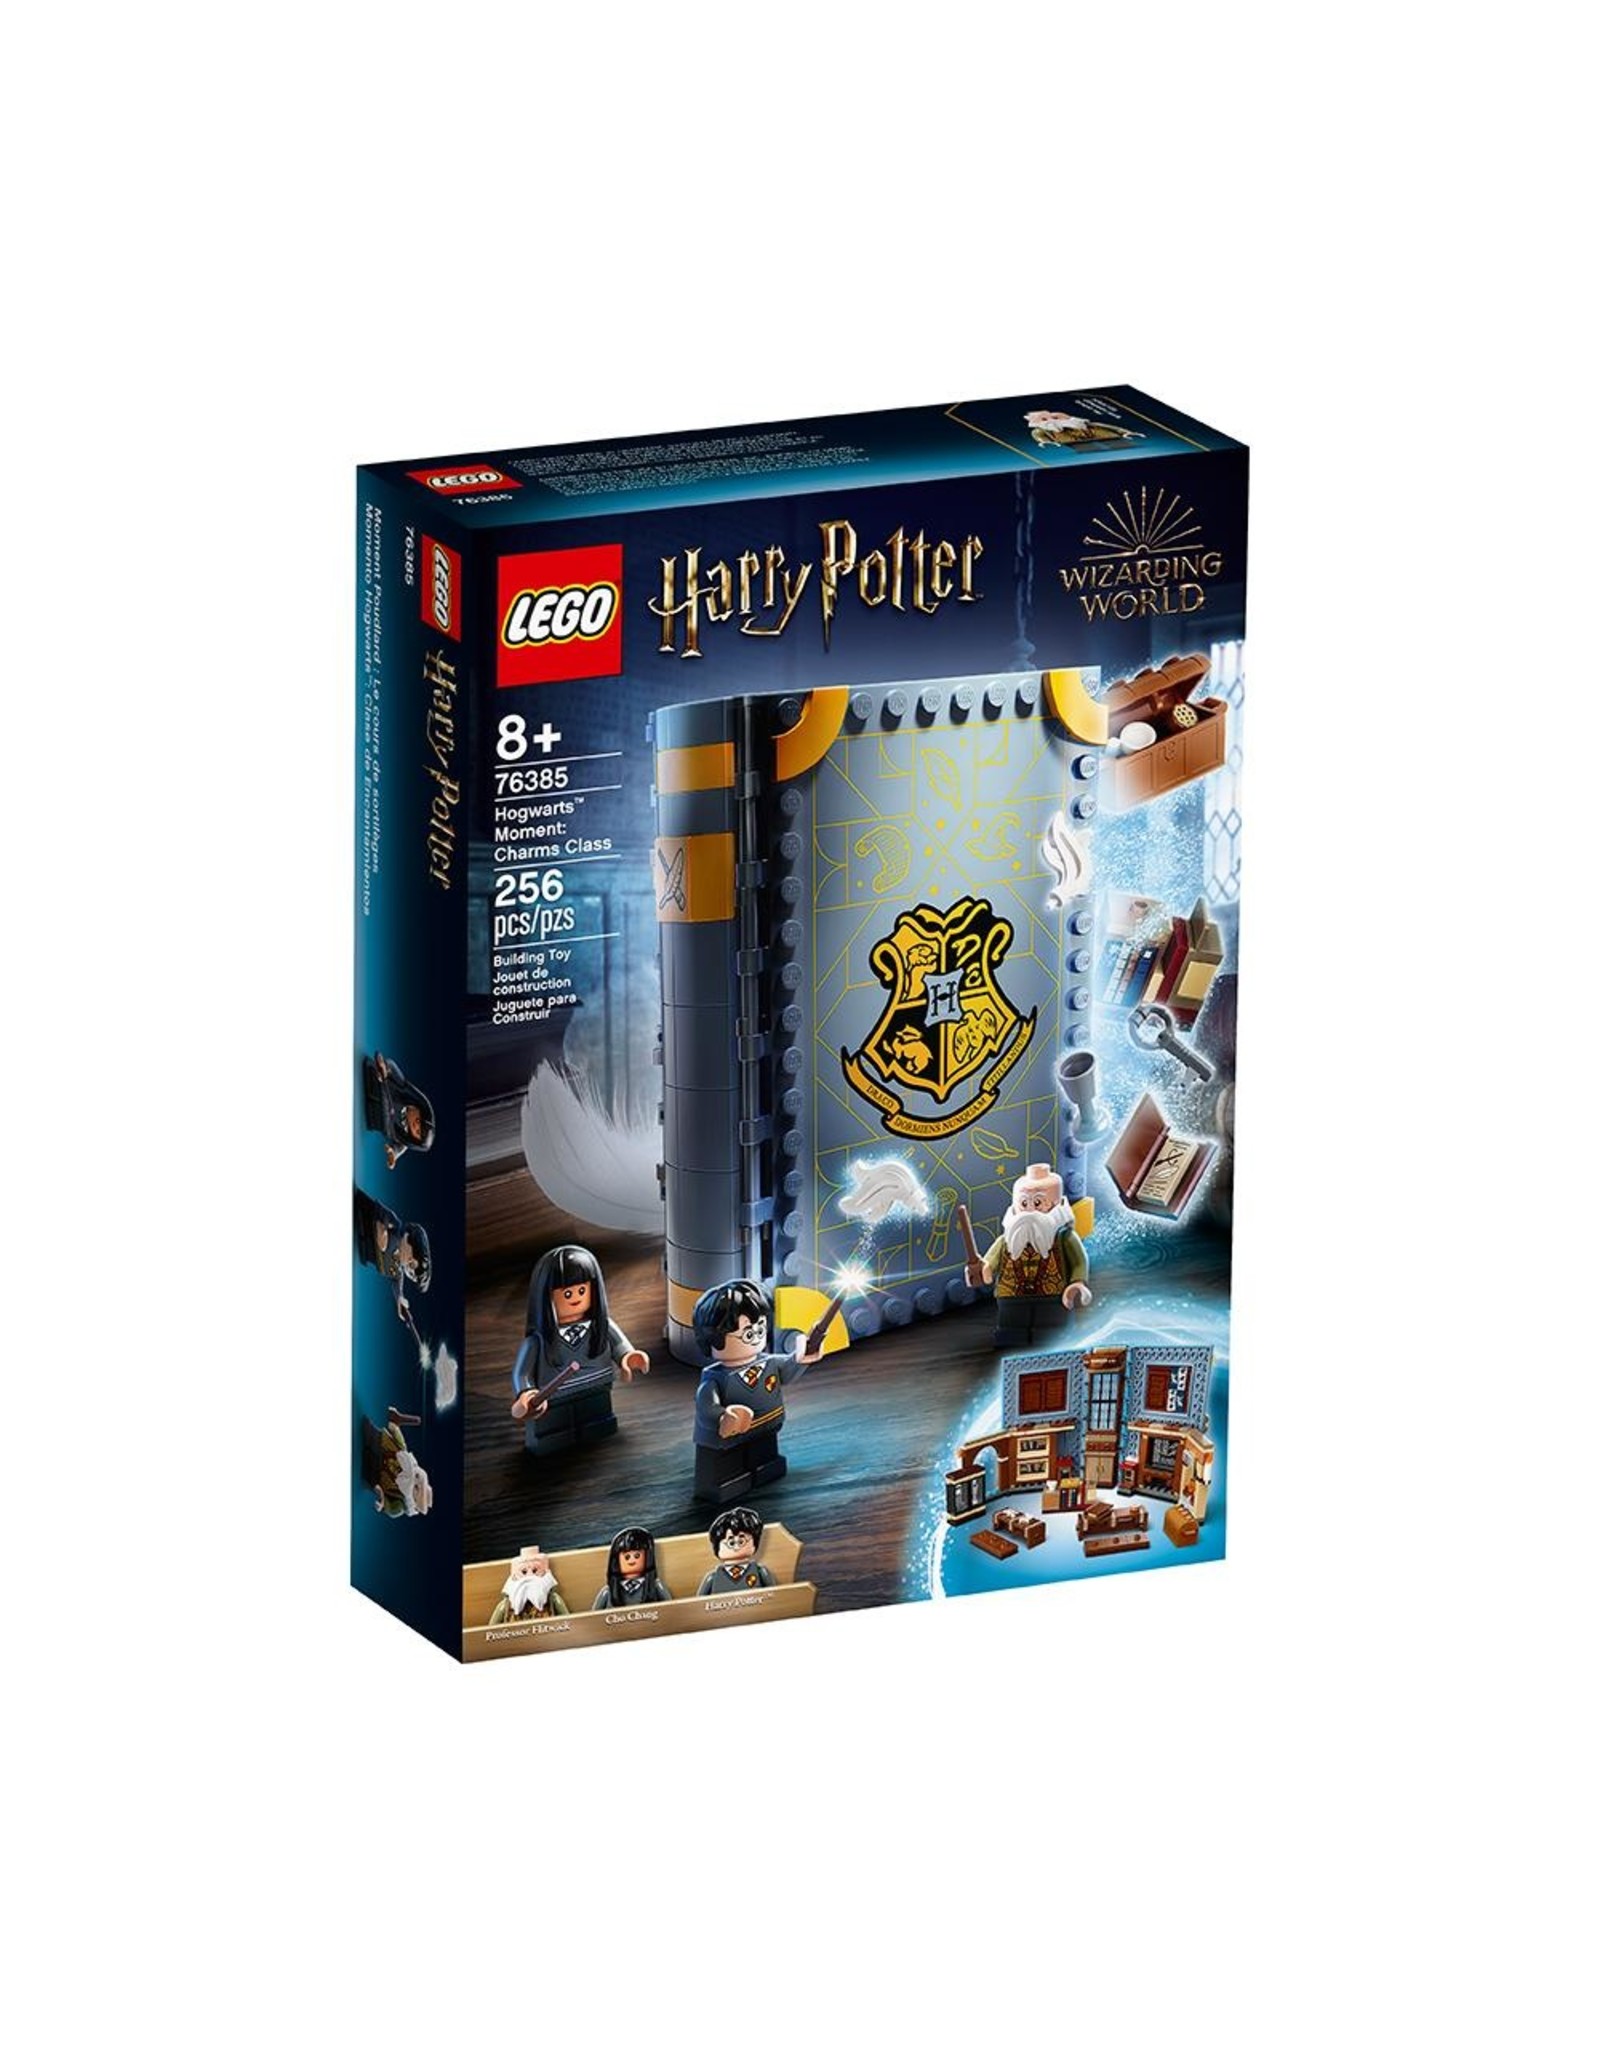 LEGO Harry Potter - 76385 Hogwarts Monent: Charms Class